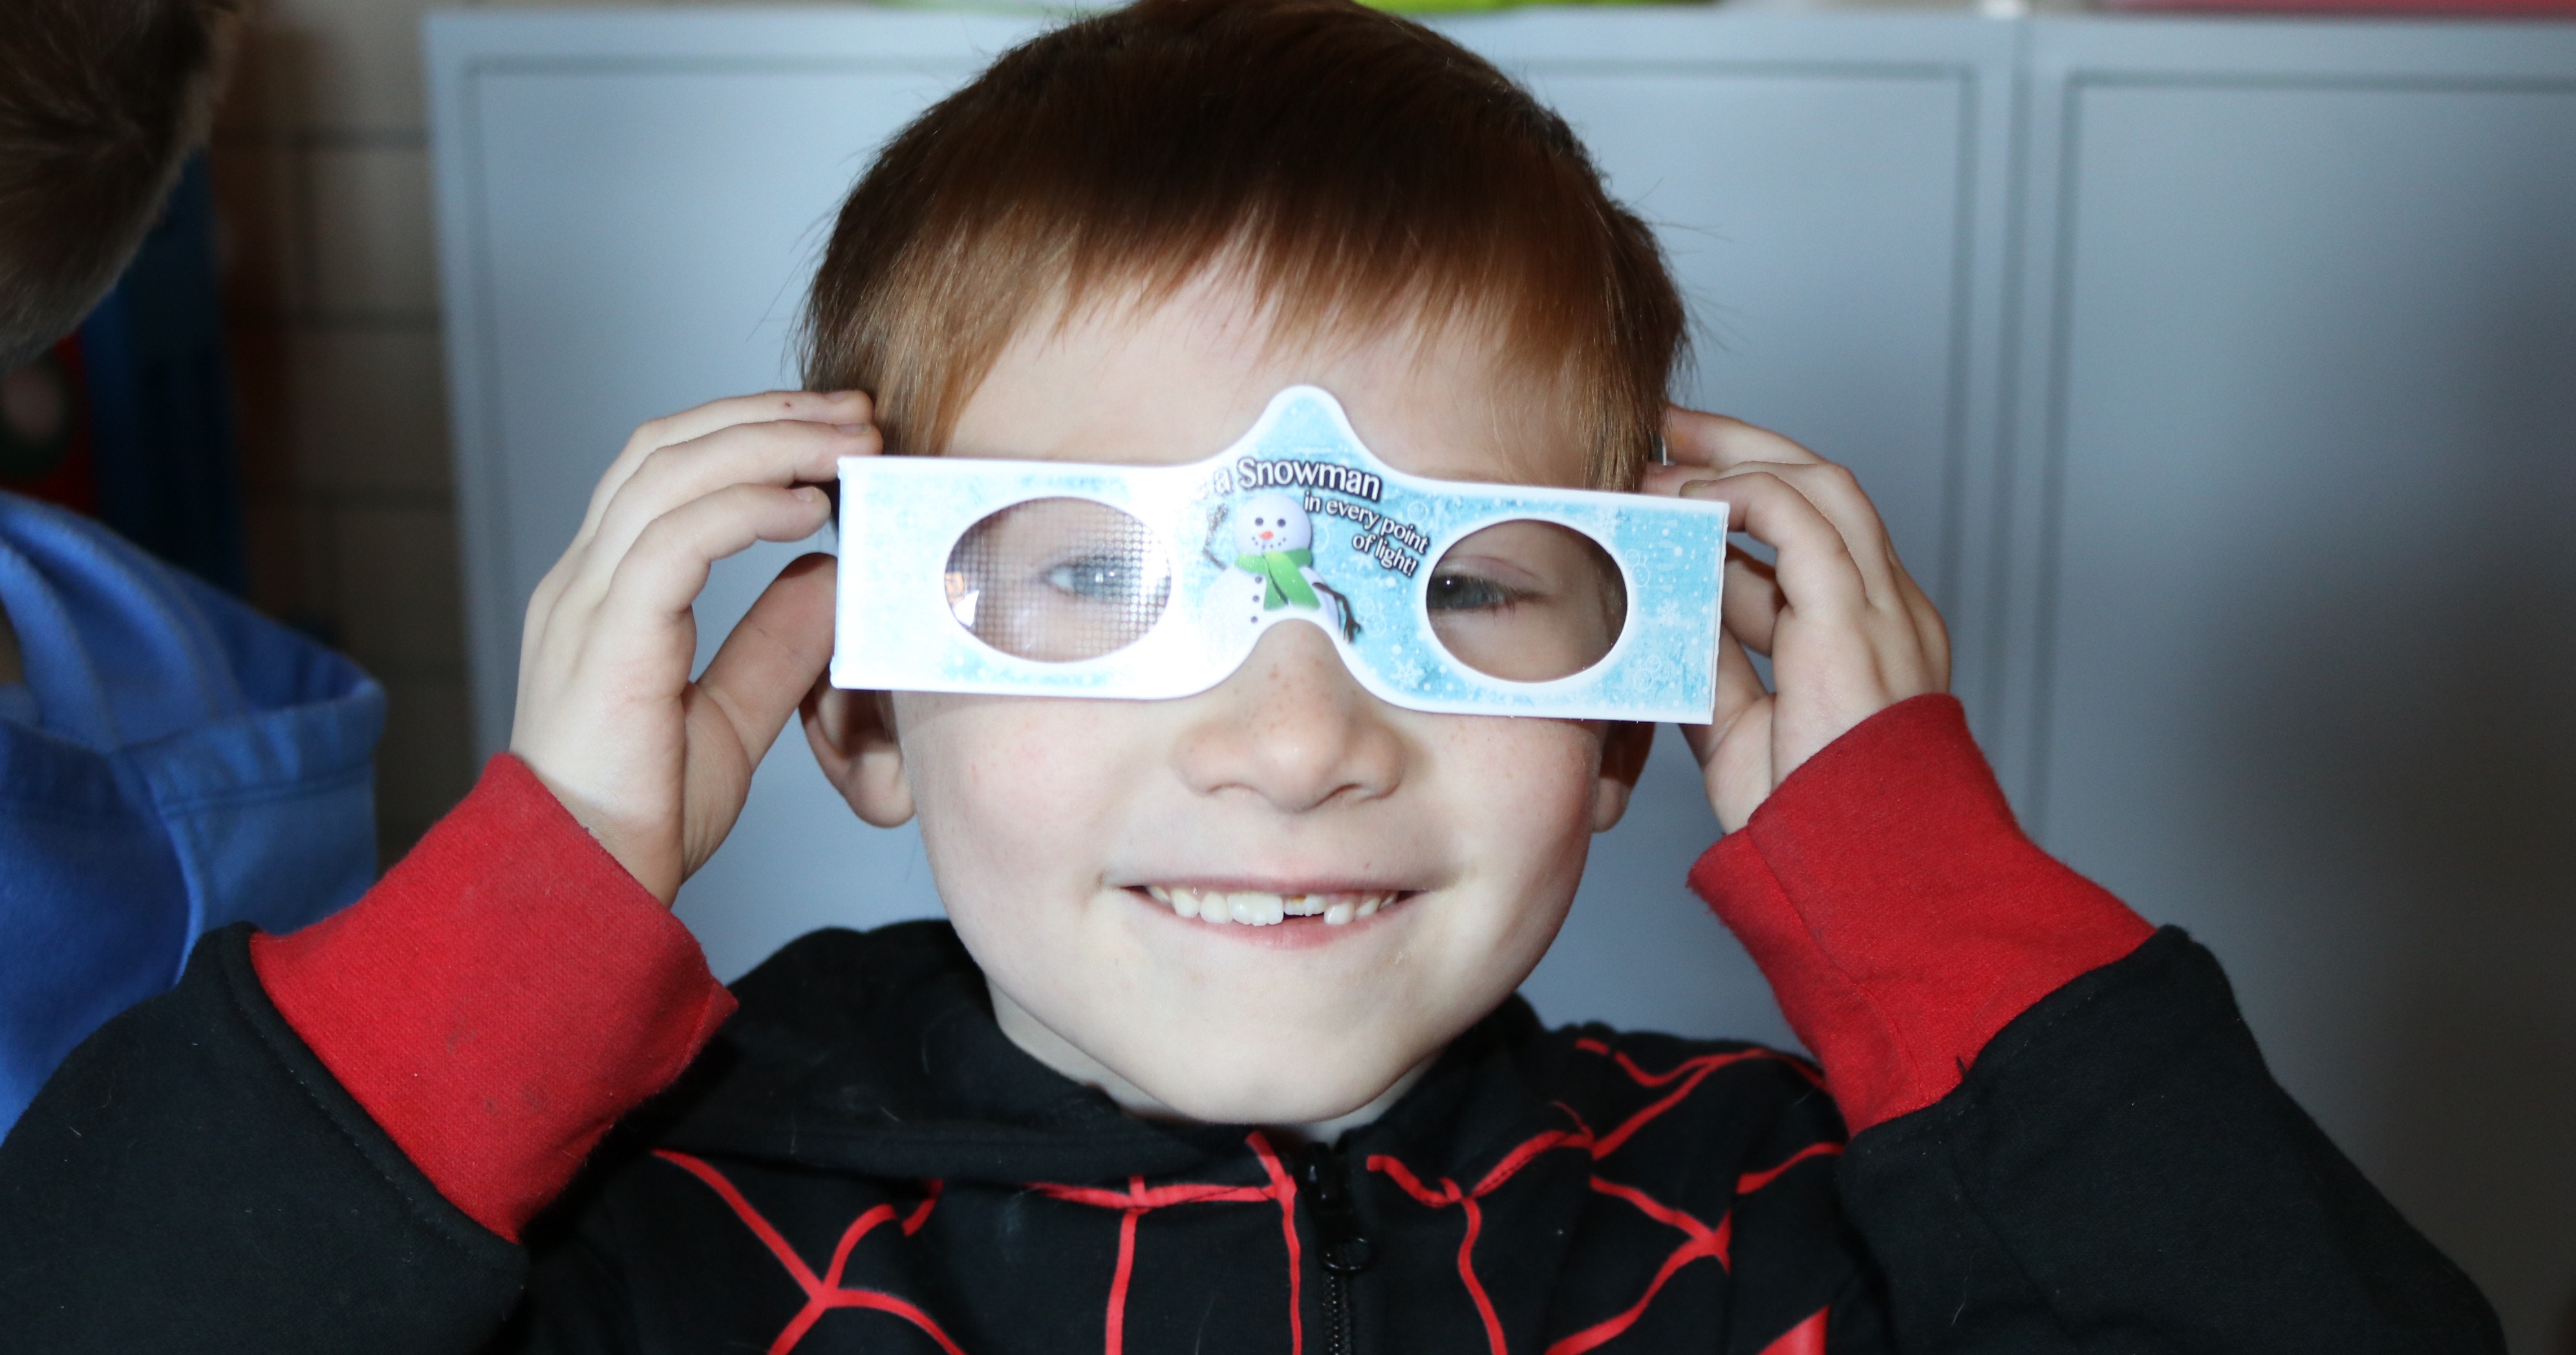 A little boy wearing silly glasses